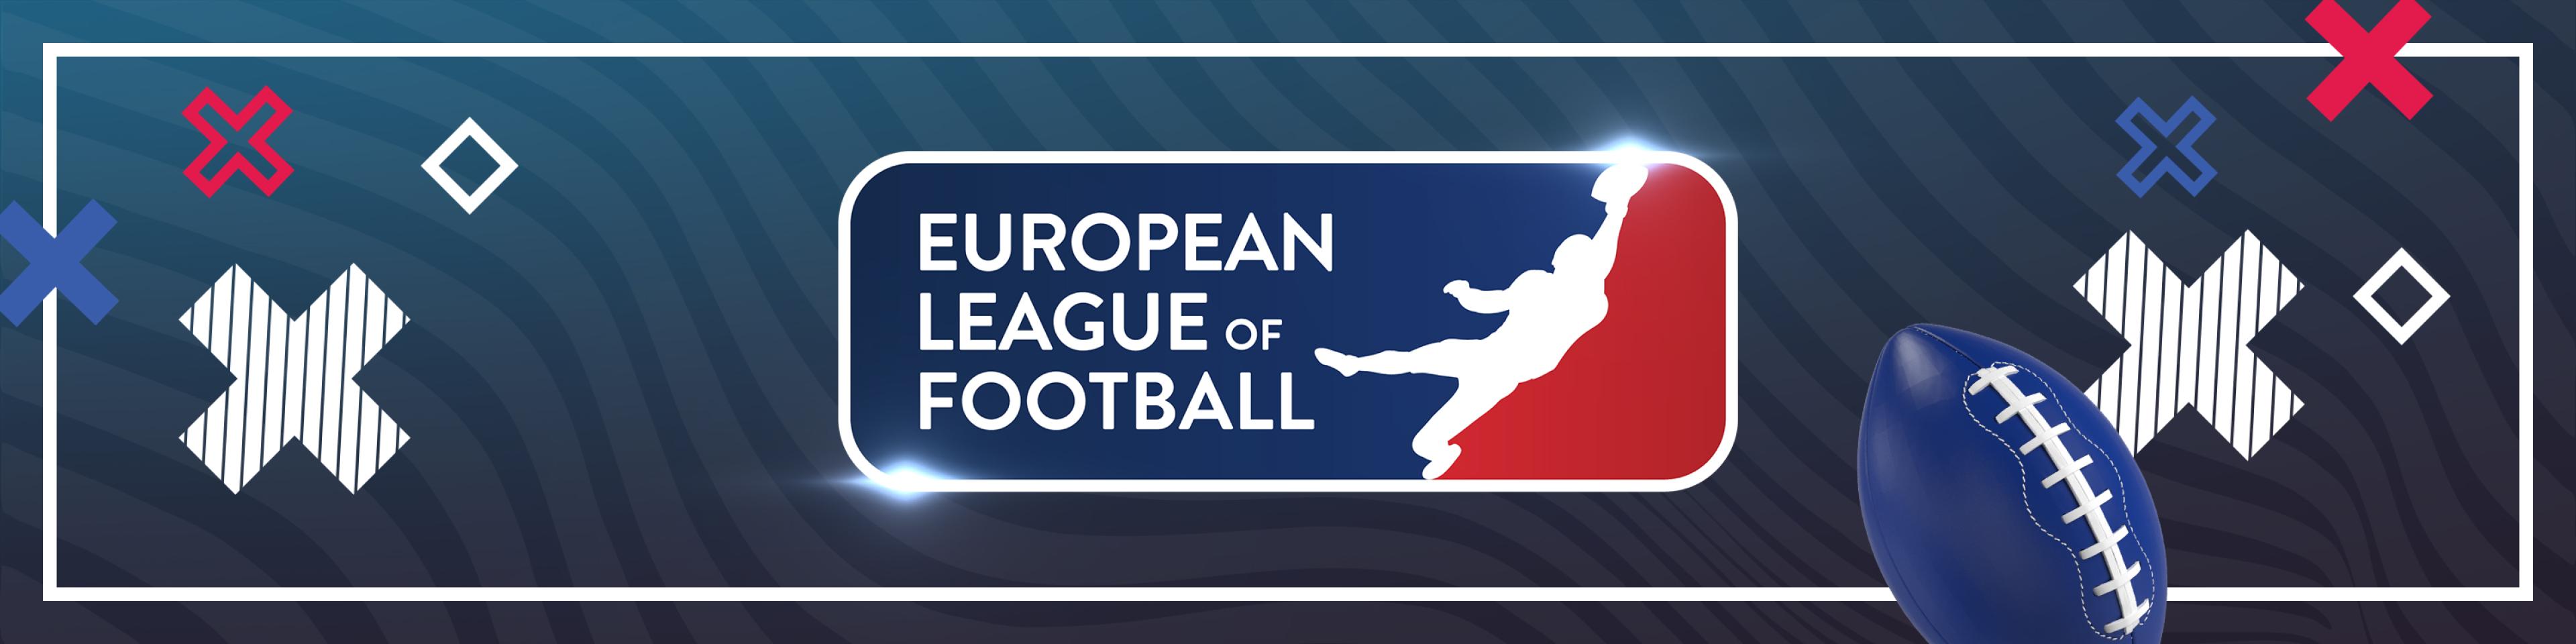 European League of Football live auf PULS 24